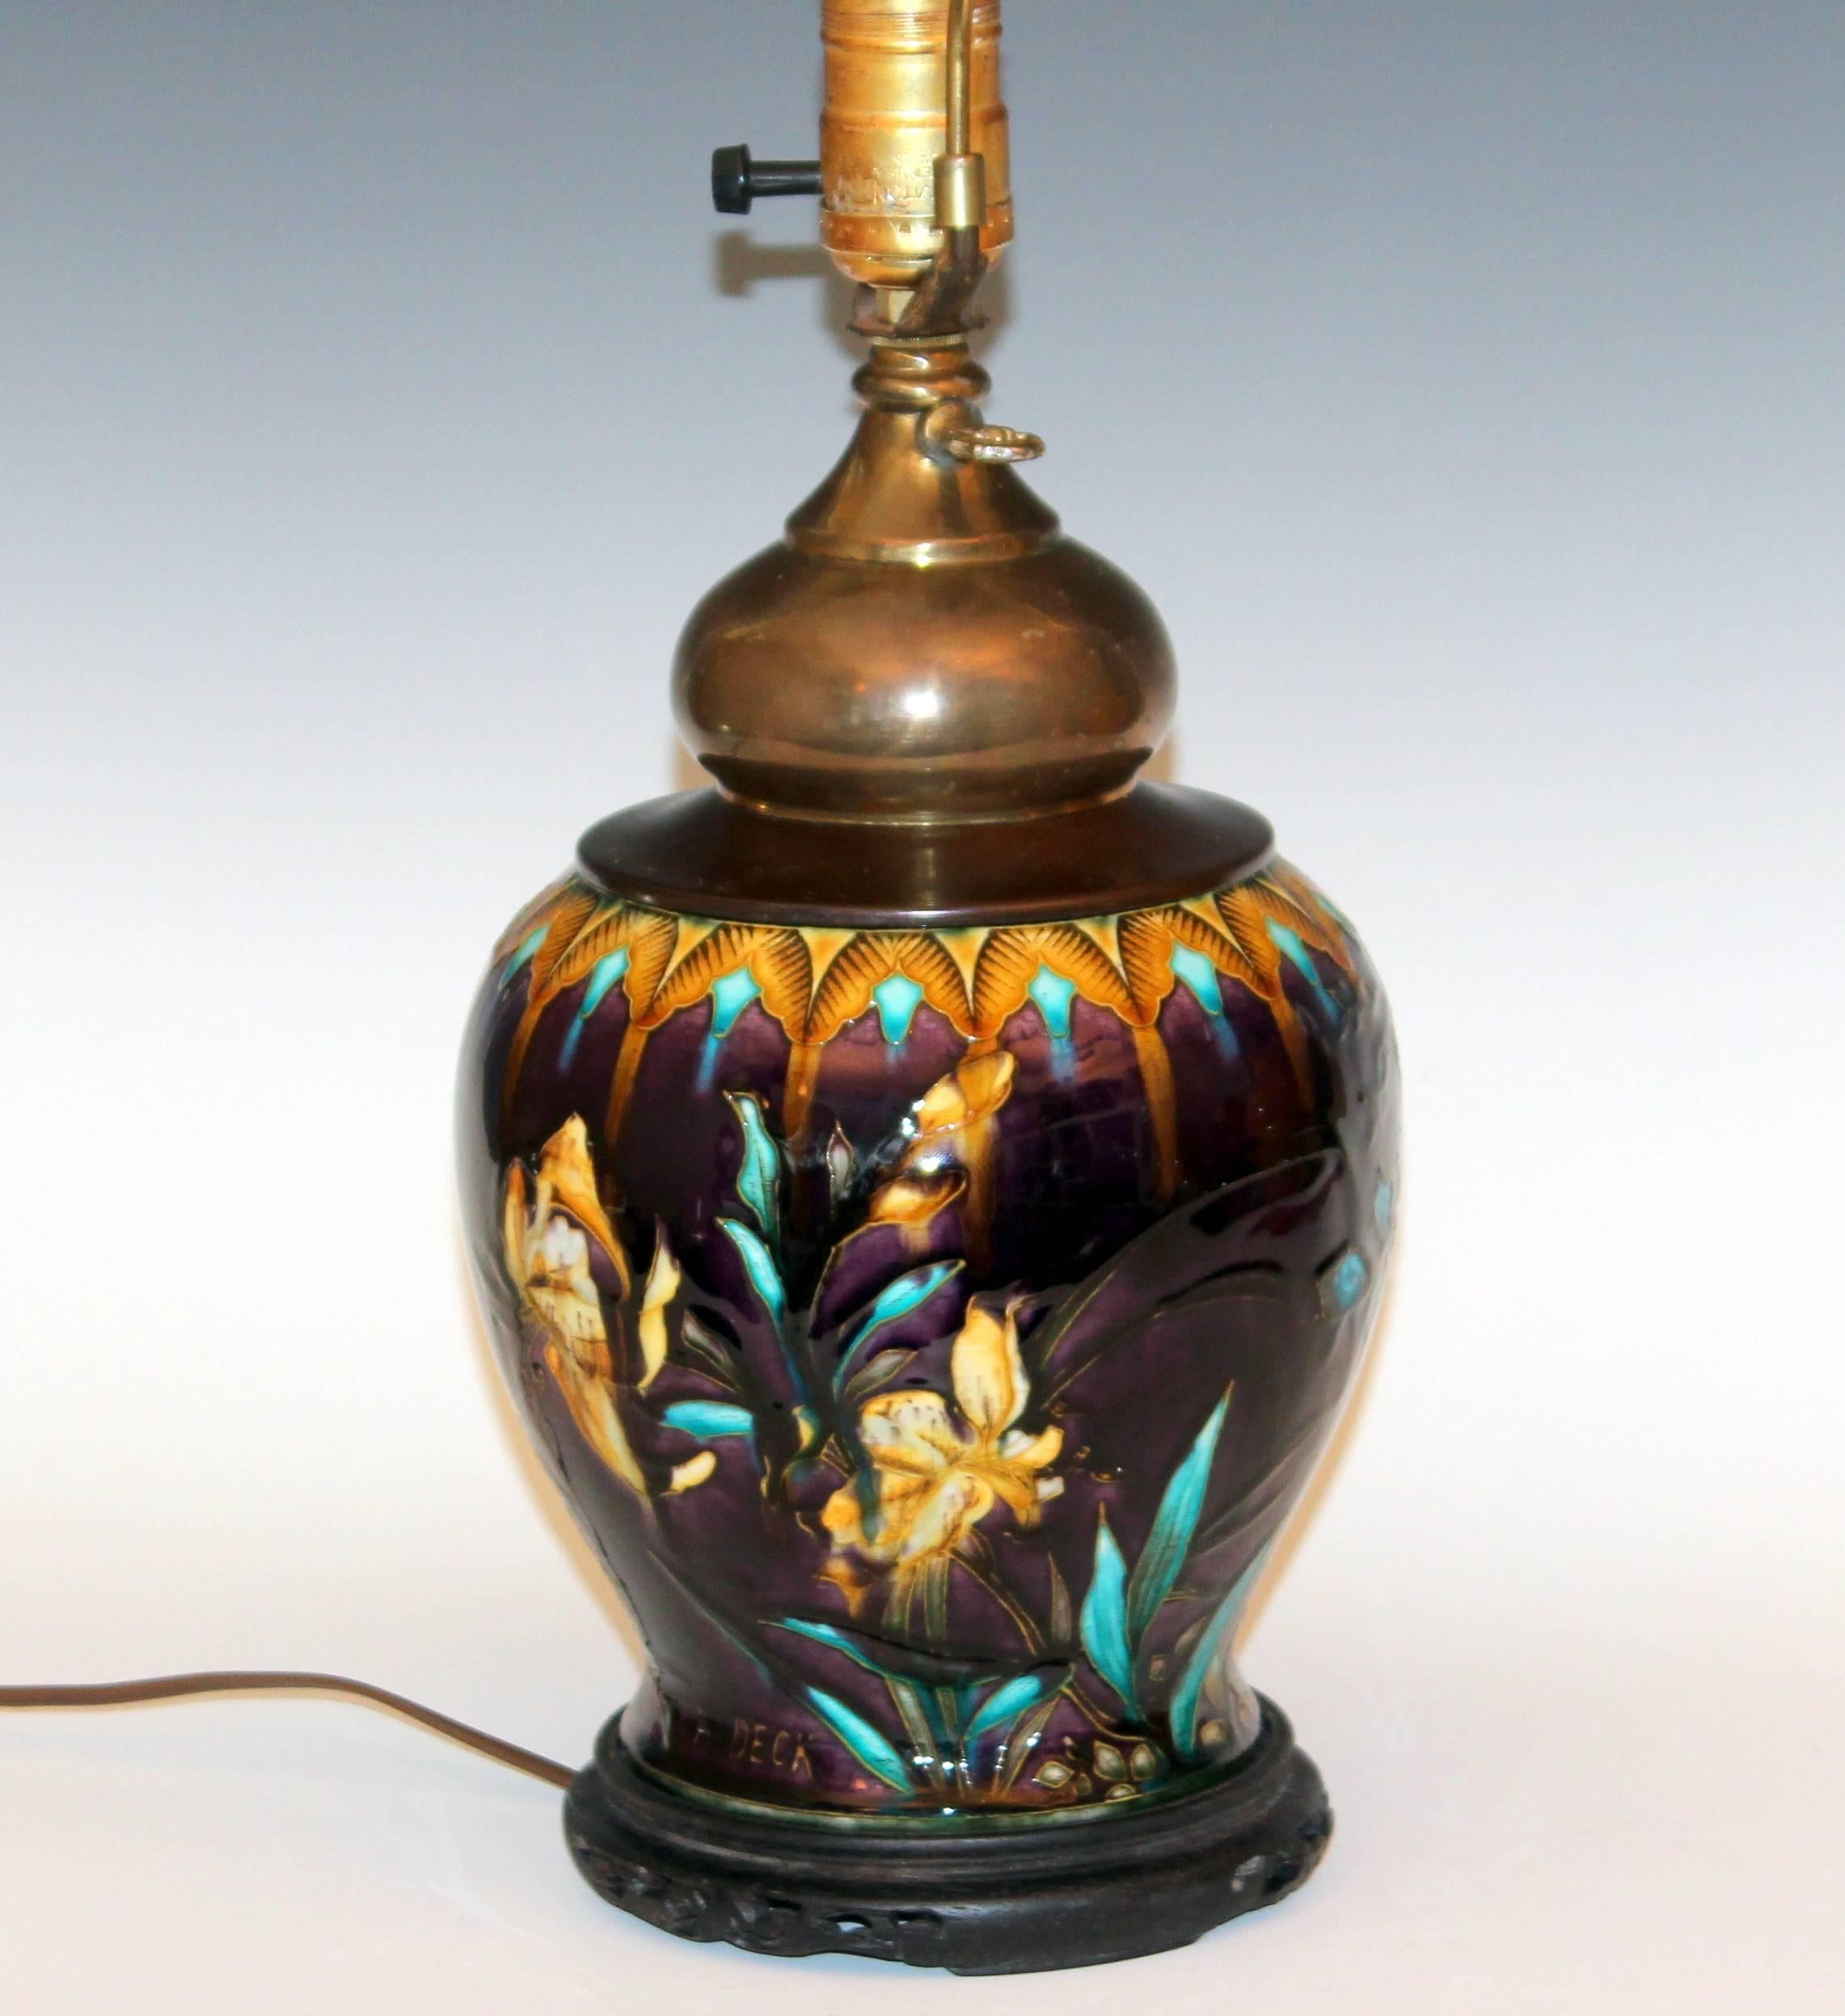 Aesthetic Movement Antique Theodore Deck French Converted Kerosene Lamp